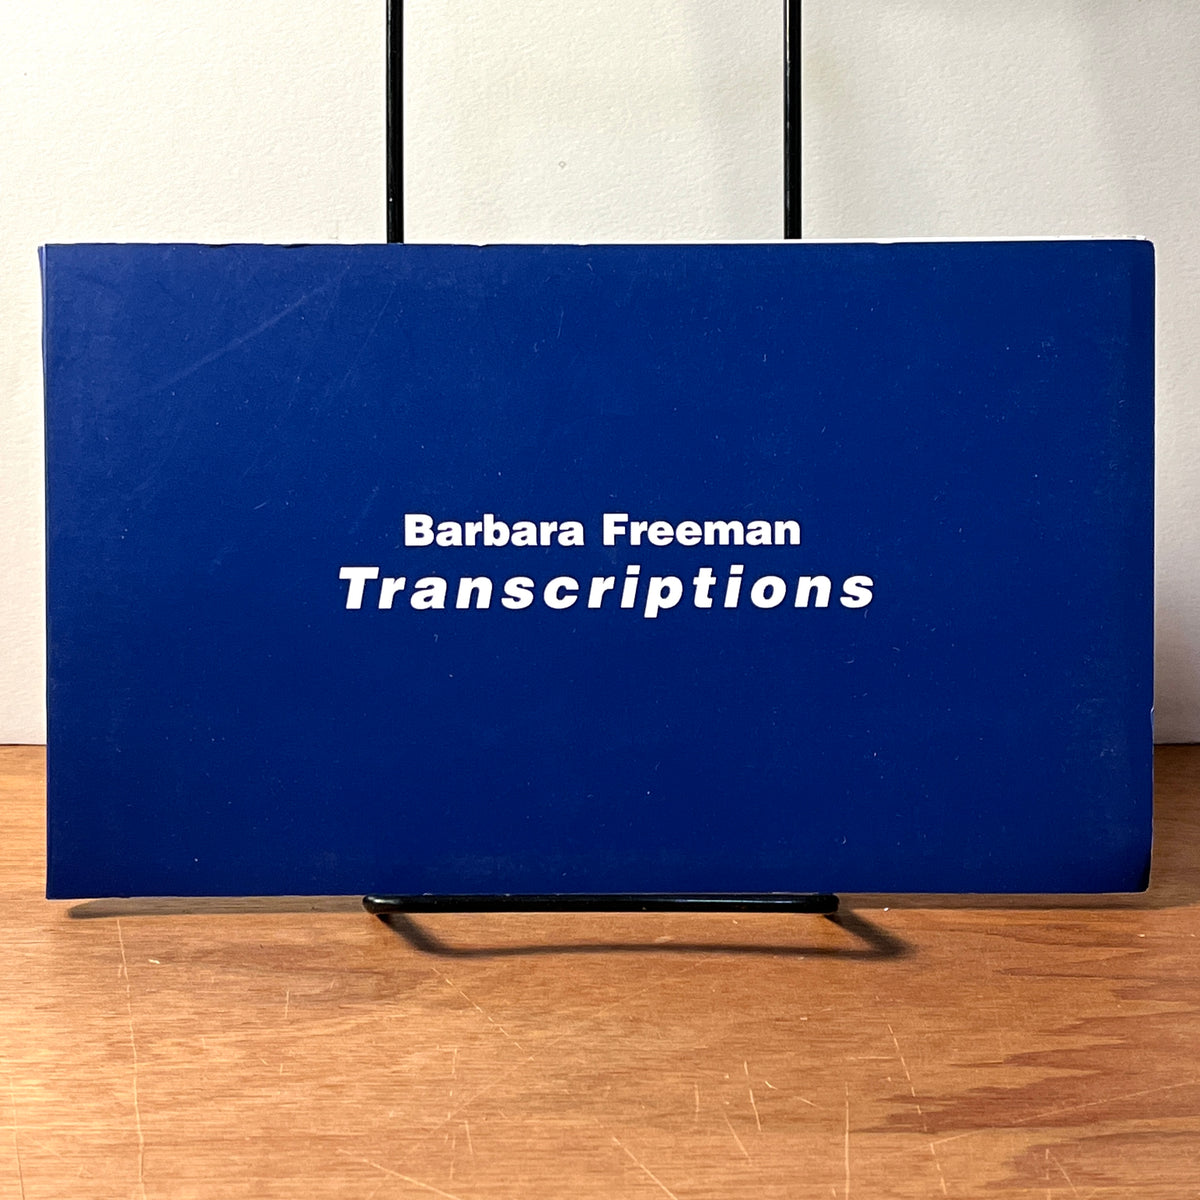 Barbara Freeman: Transcriptions, Black Square Books, 1997, Very Good